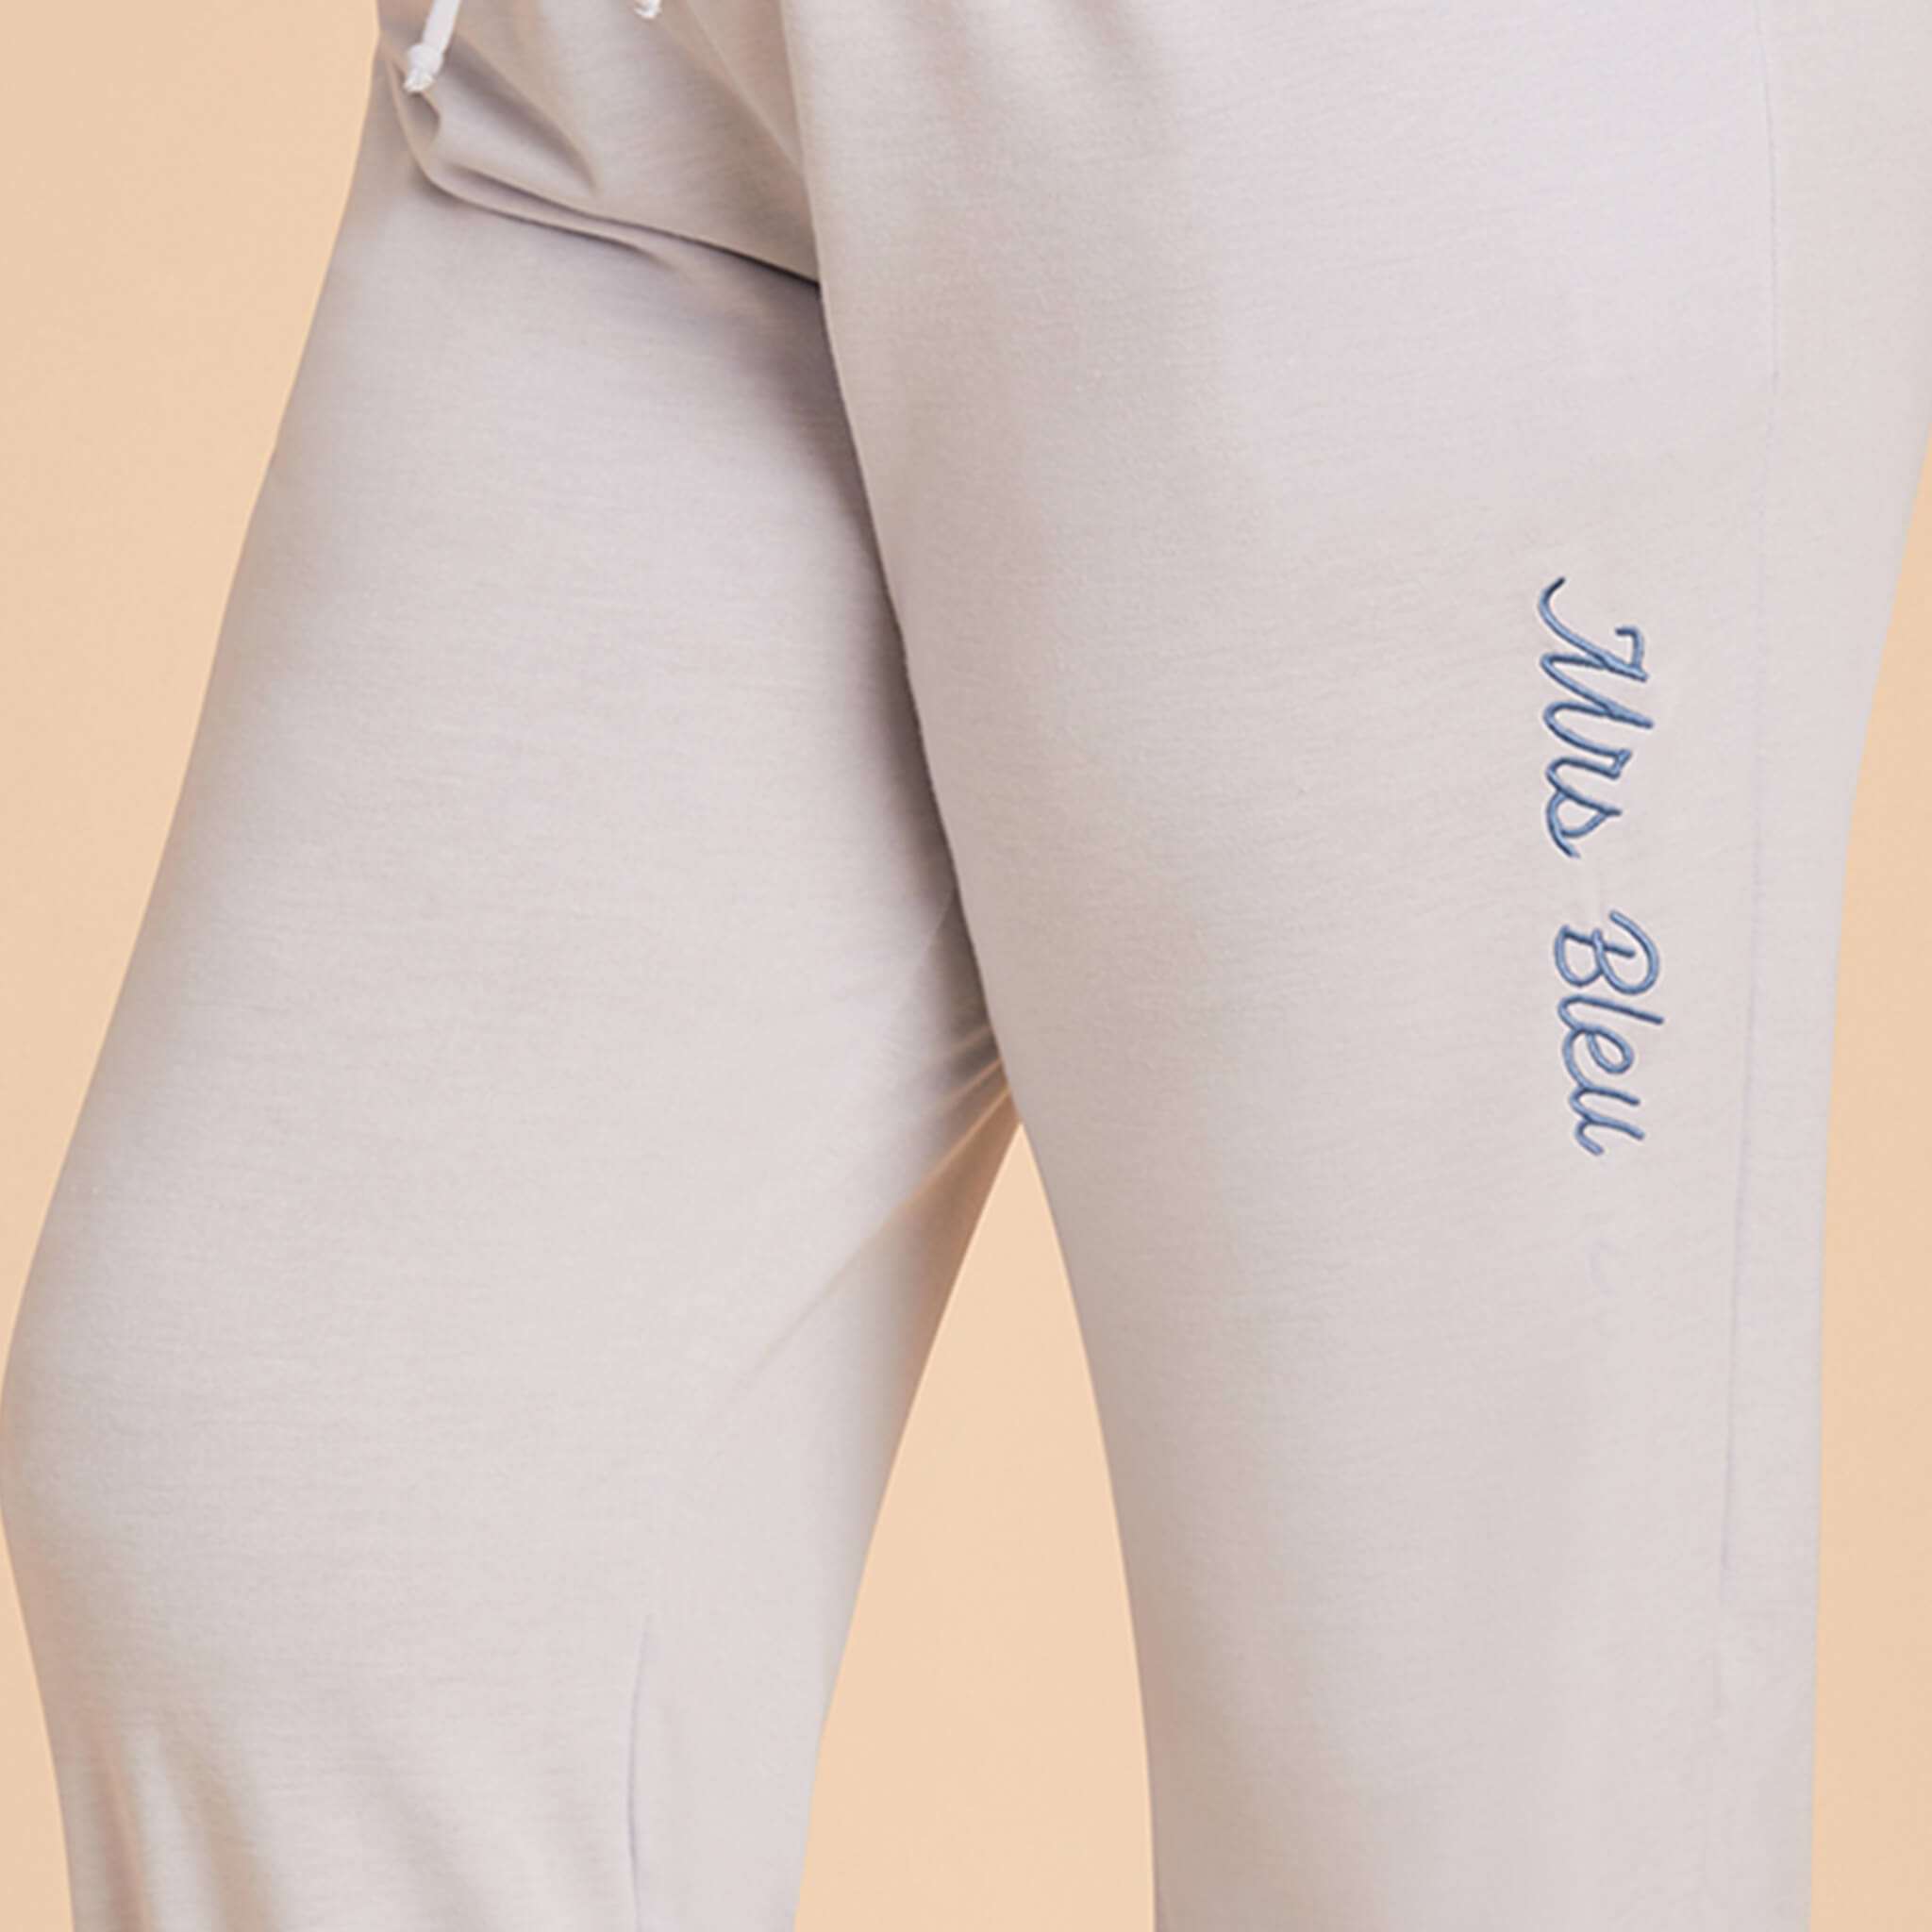 Plus Size Light Blue sweatpants with personalization